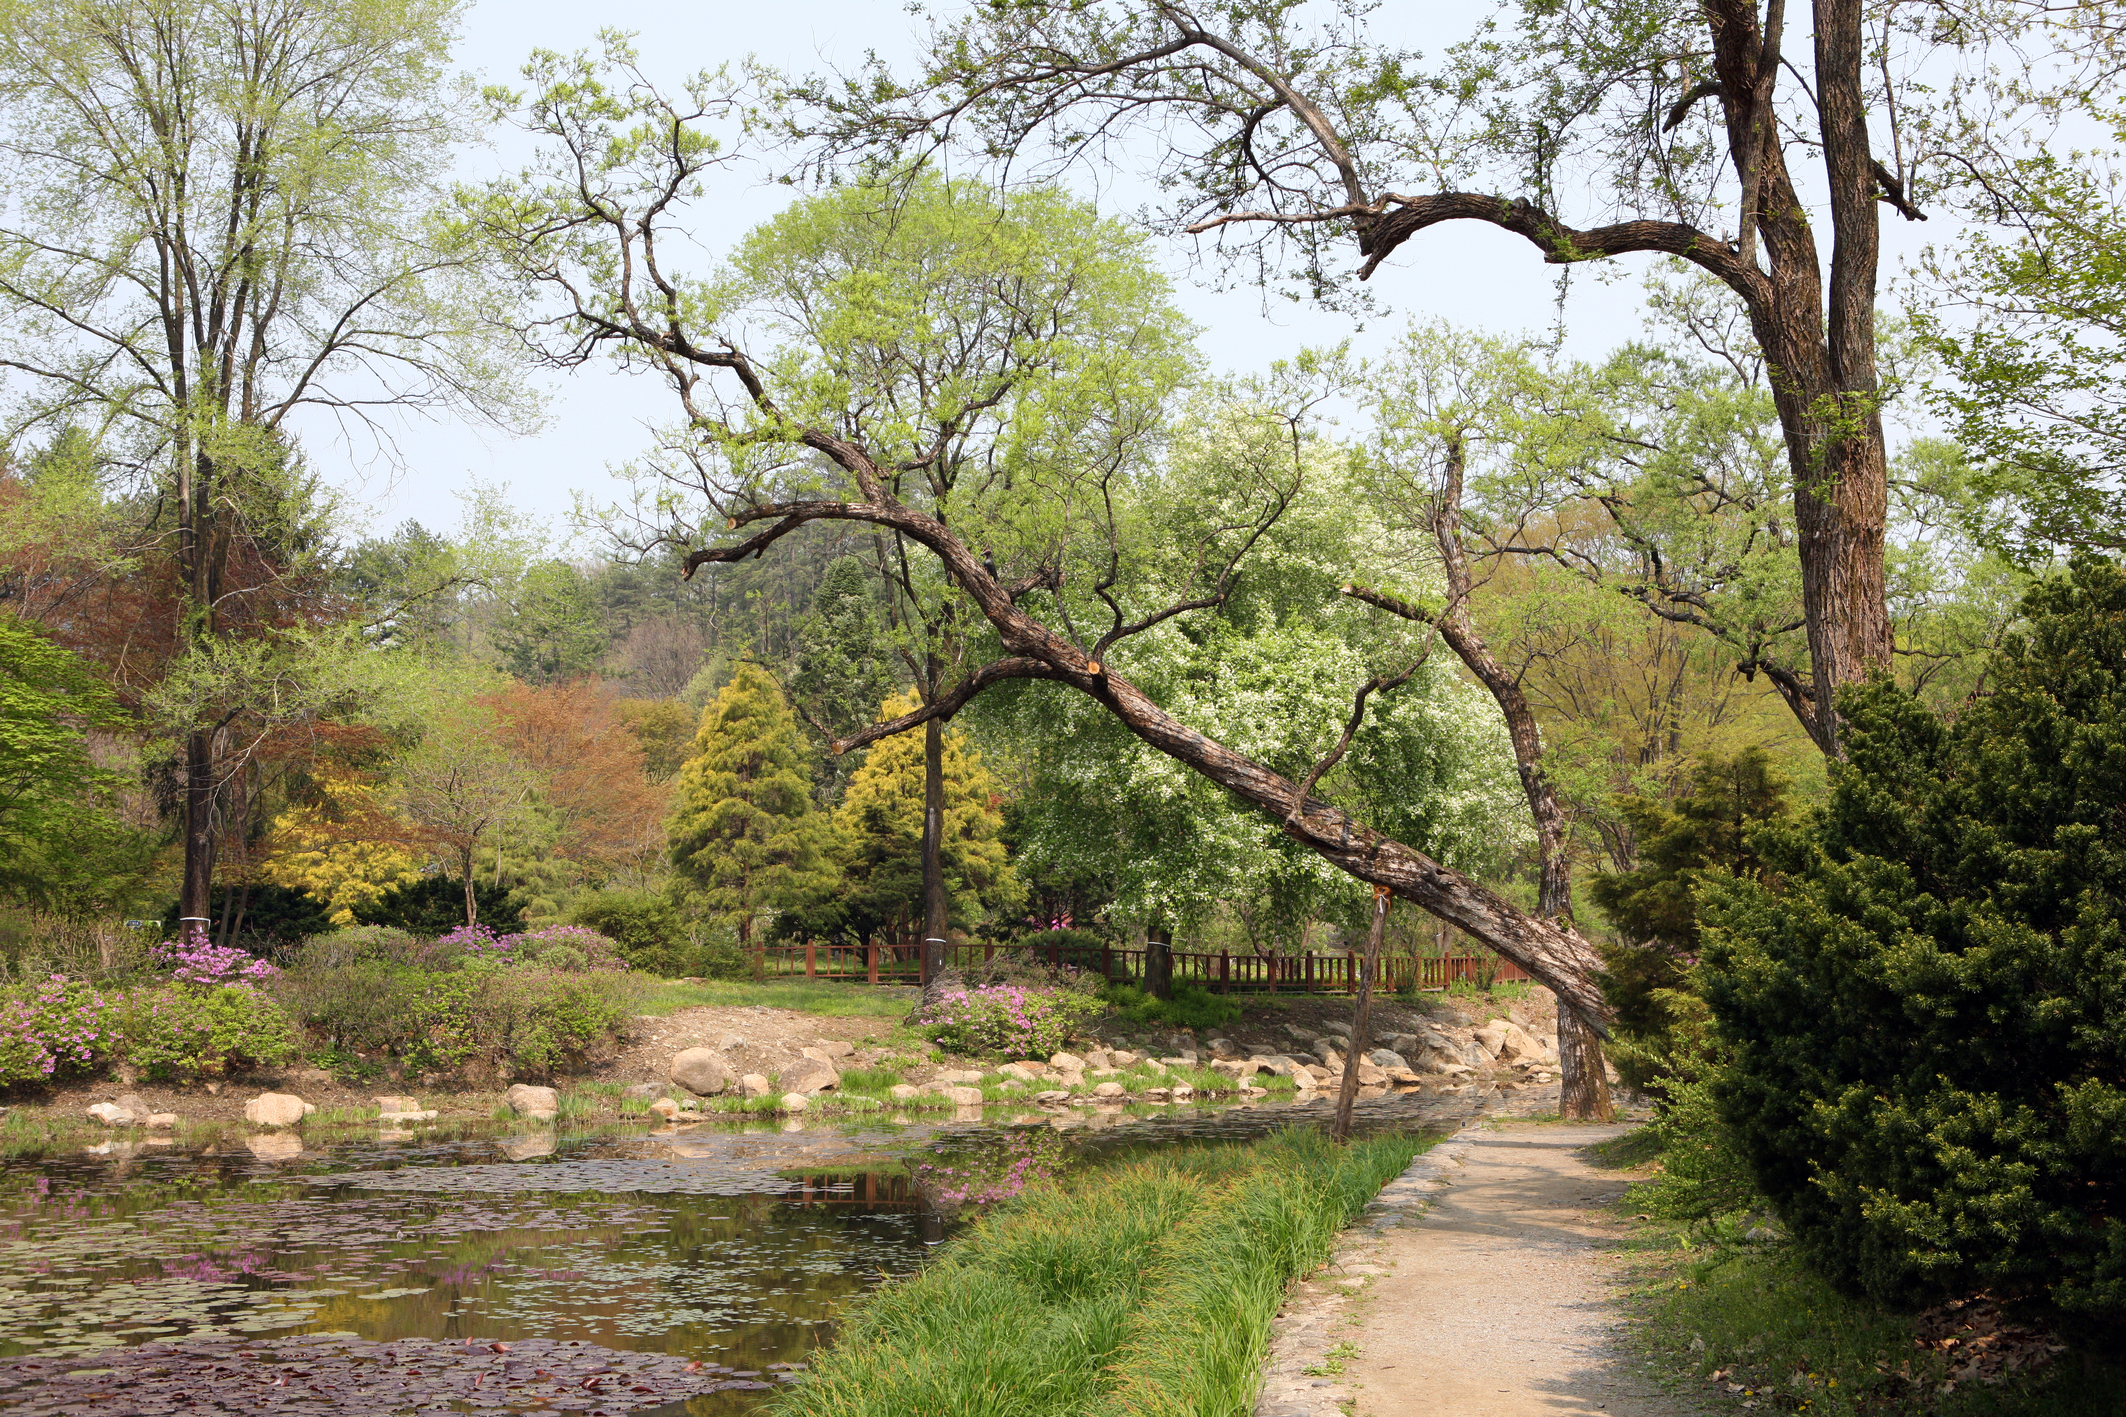 Korea national Arboretum